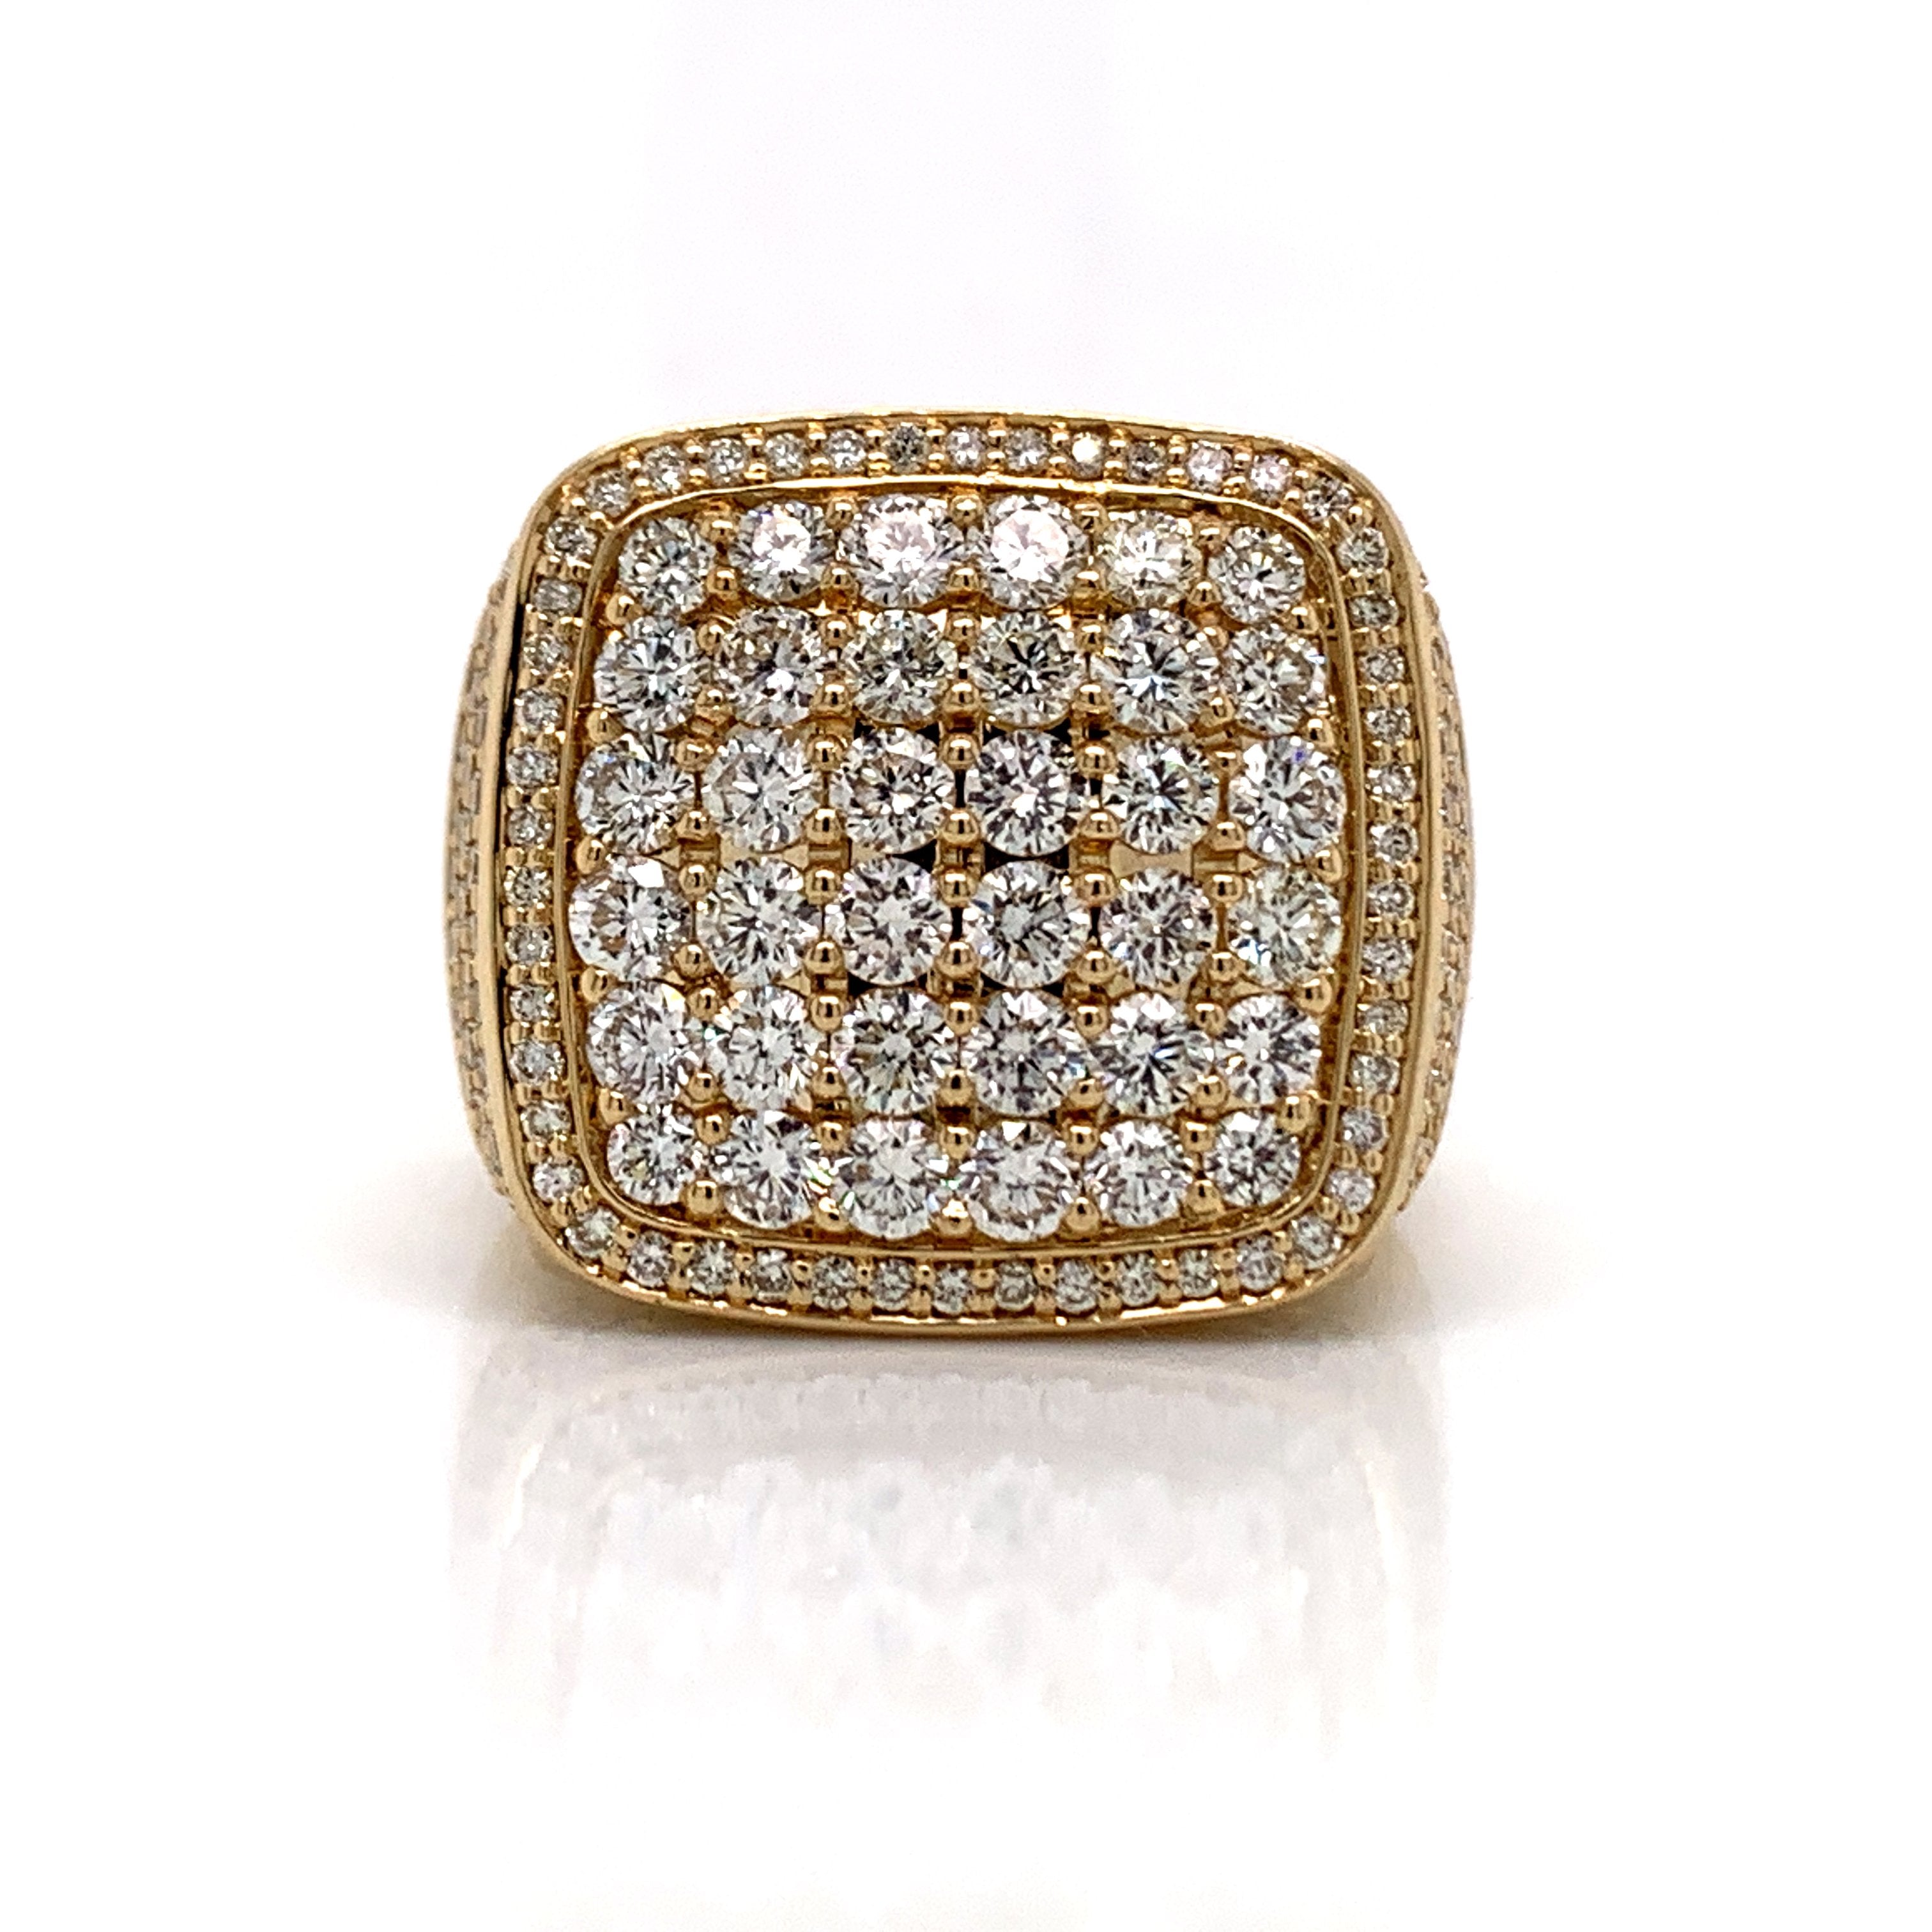 4.25 CT. Diamond Regal Square Ring in 14K Gold - White Carat Diamonds 